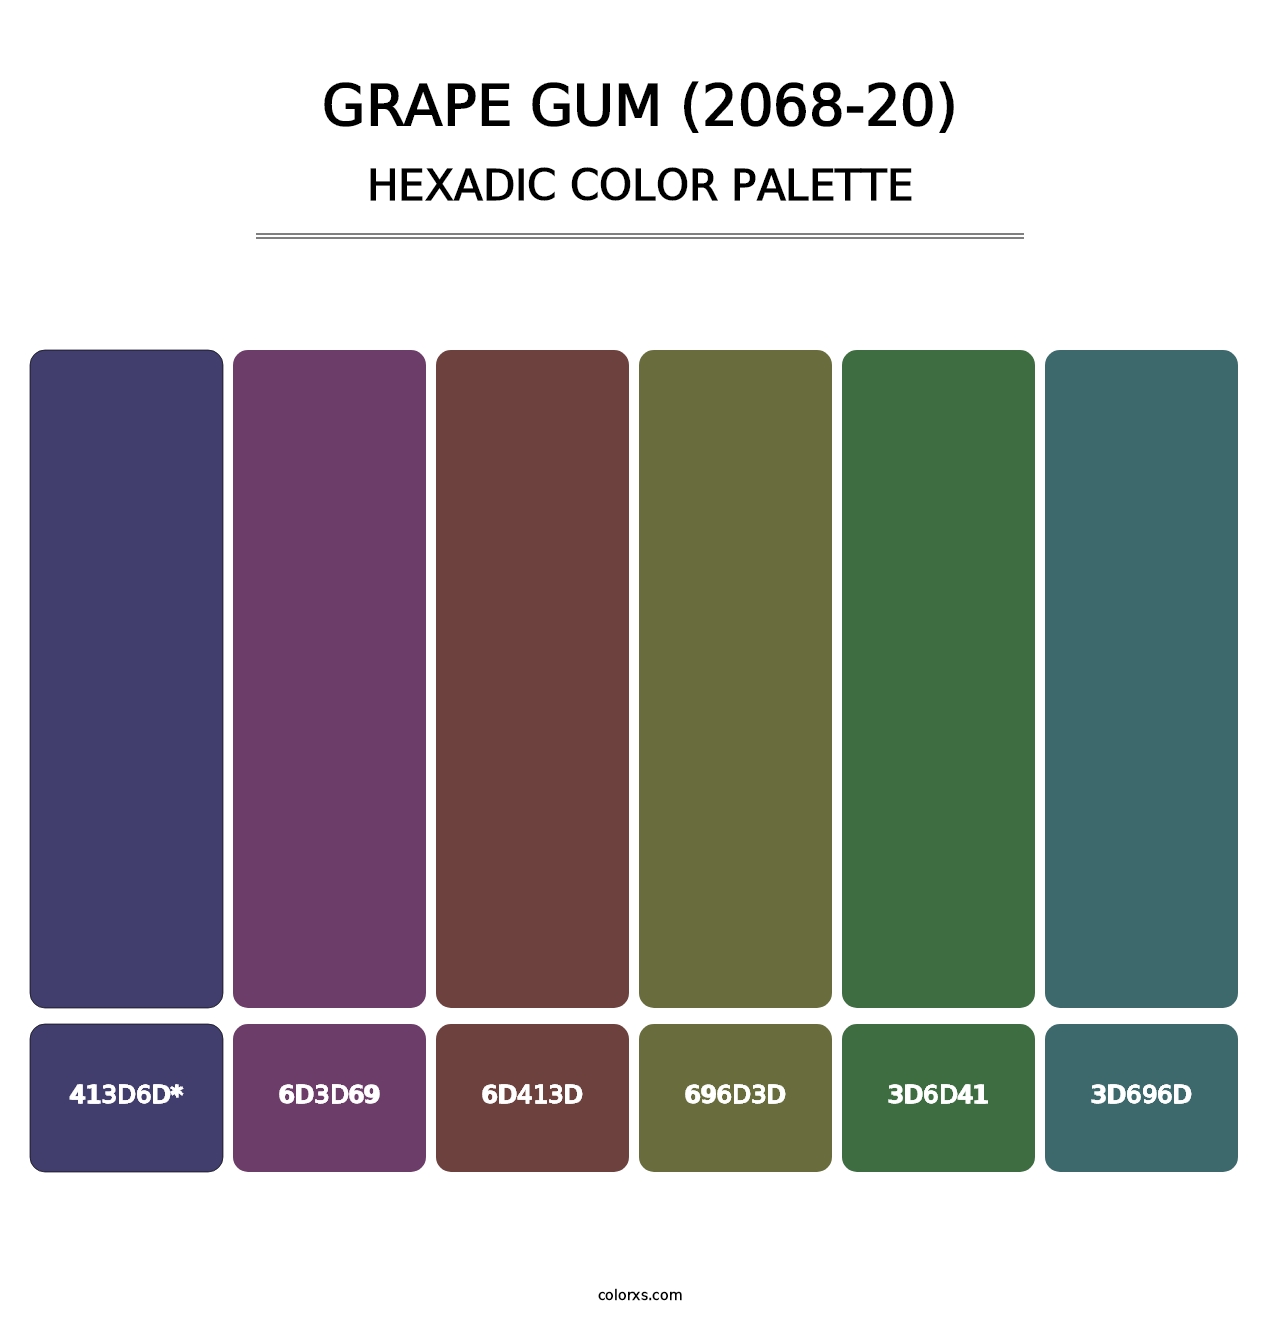 Grape Gum (2068-20) - Hexadic Color Palette